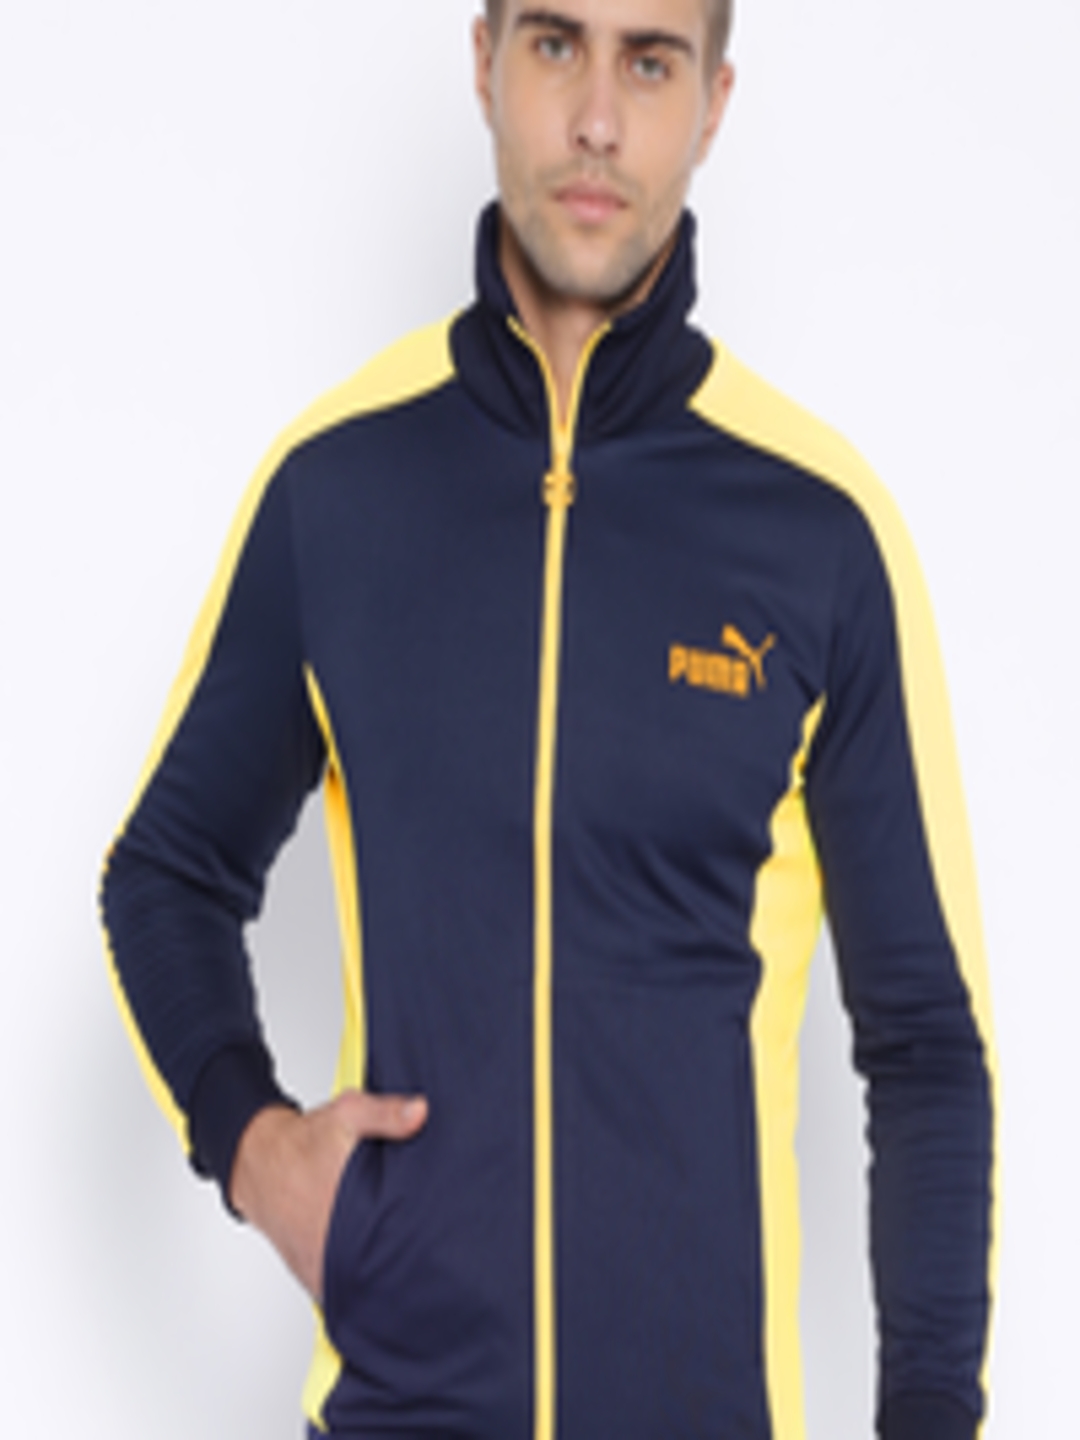 Buy PUMA Navy & Yellow Jacket - Jackets for Men 1413371 | Myntra